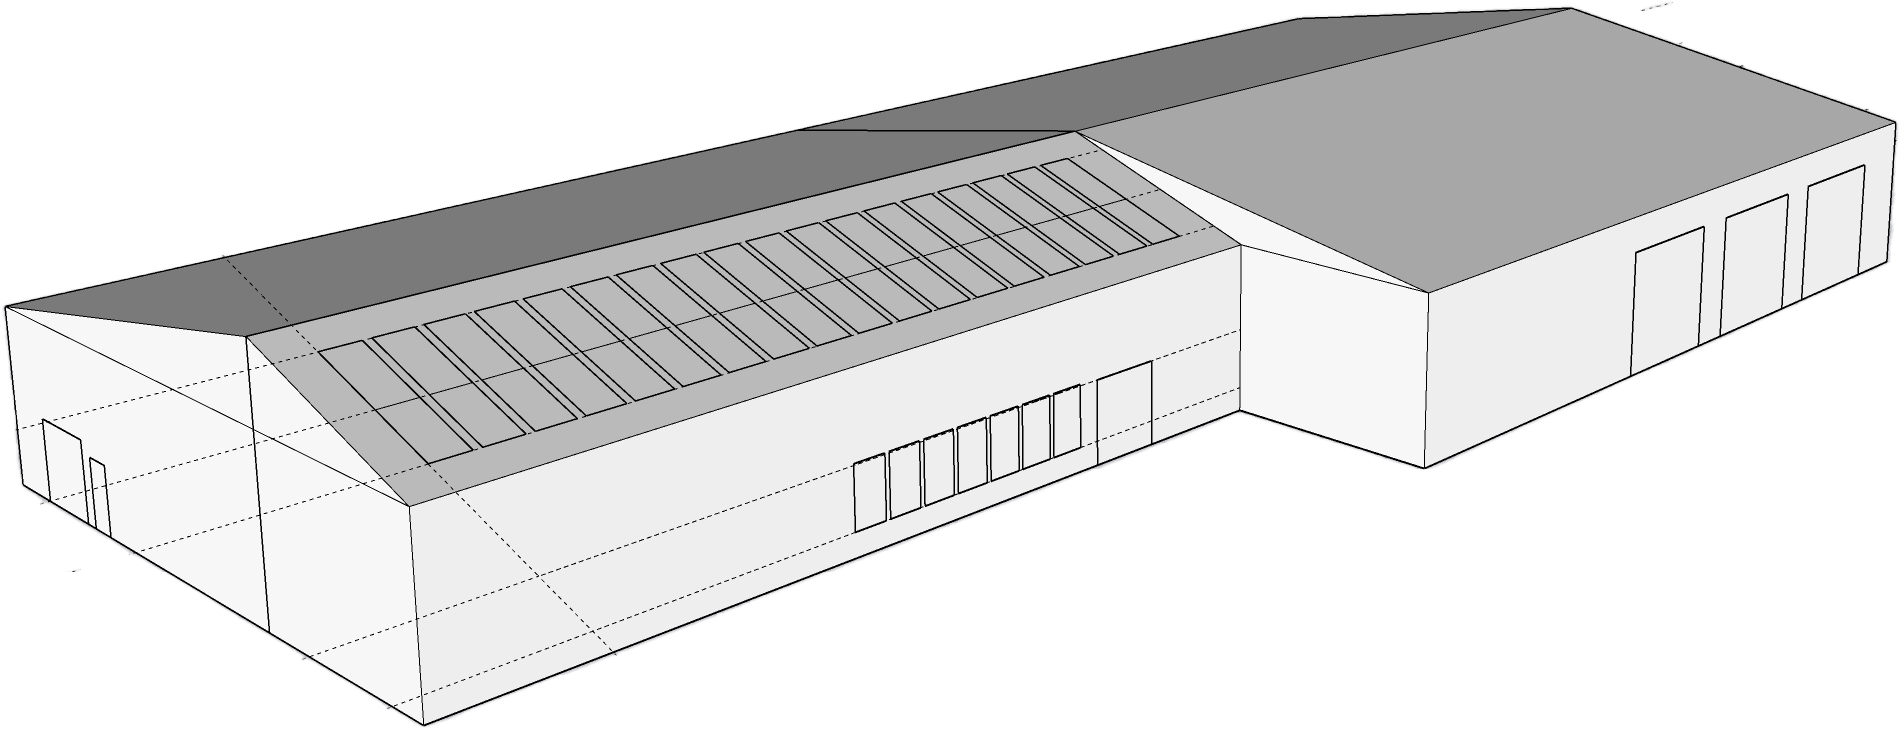 Solar powered warehouse design